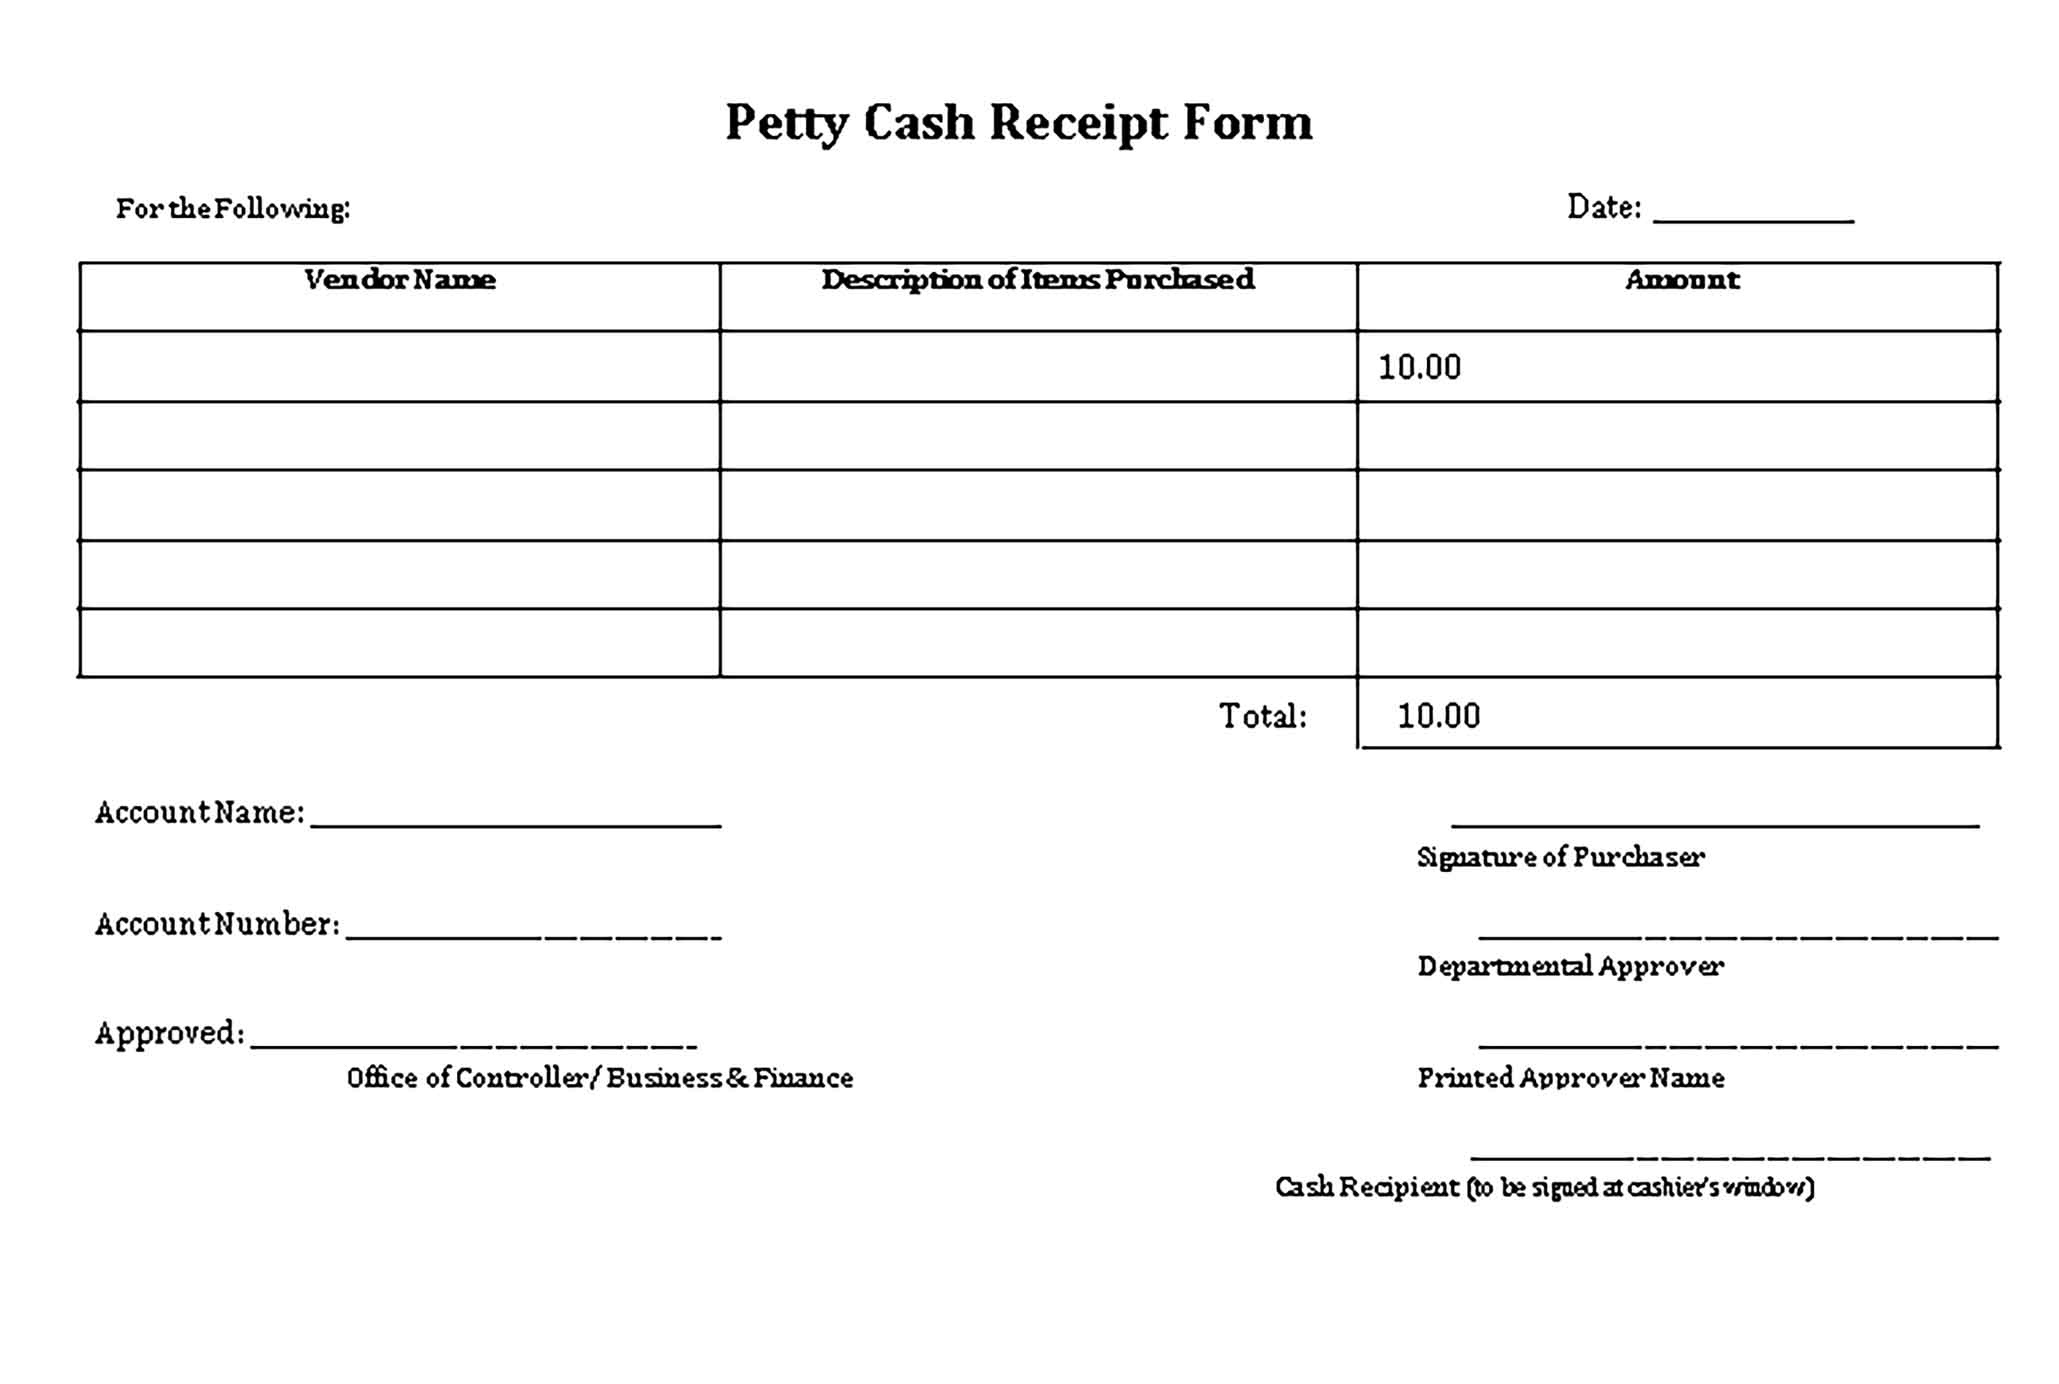 Sample Petty Cash Blank Receipt Templates